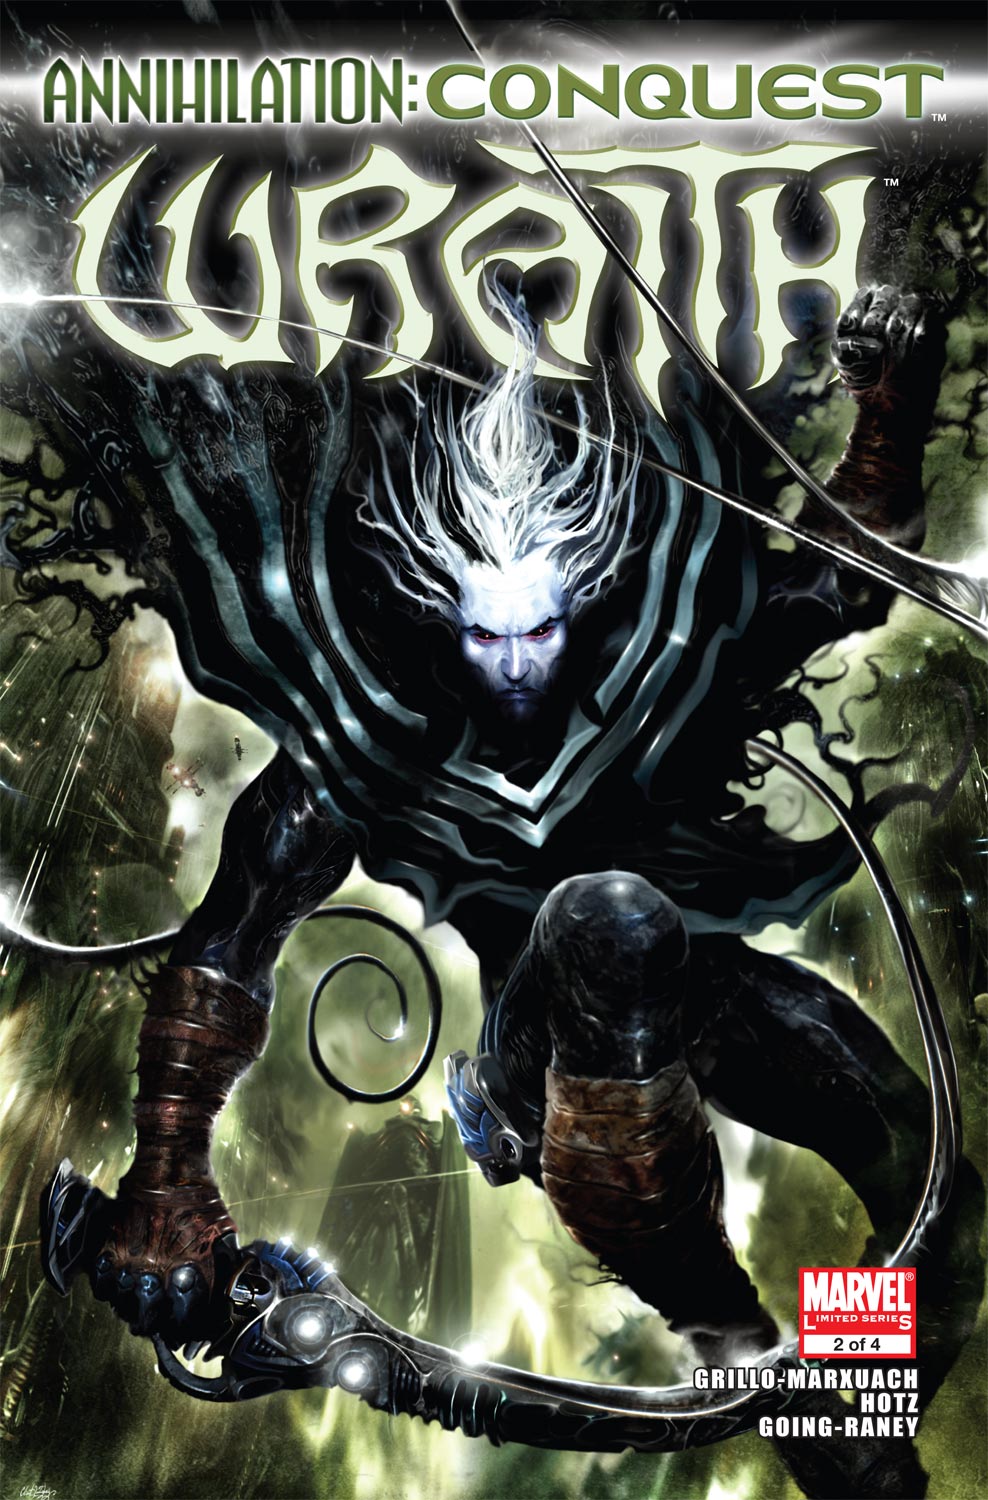 Annihilation: Conquest - Wraith (2007) #2